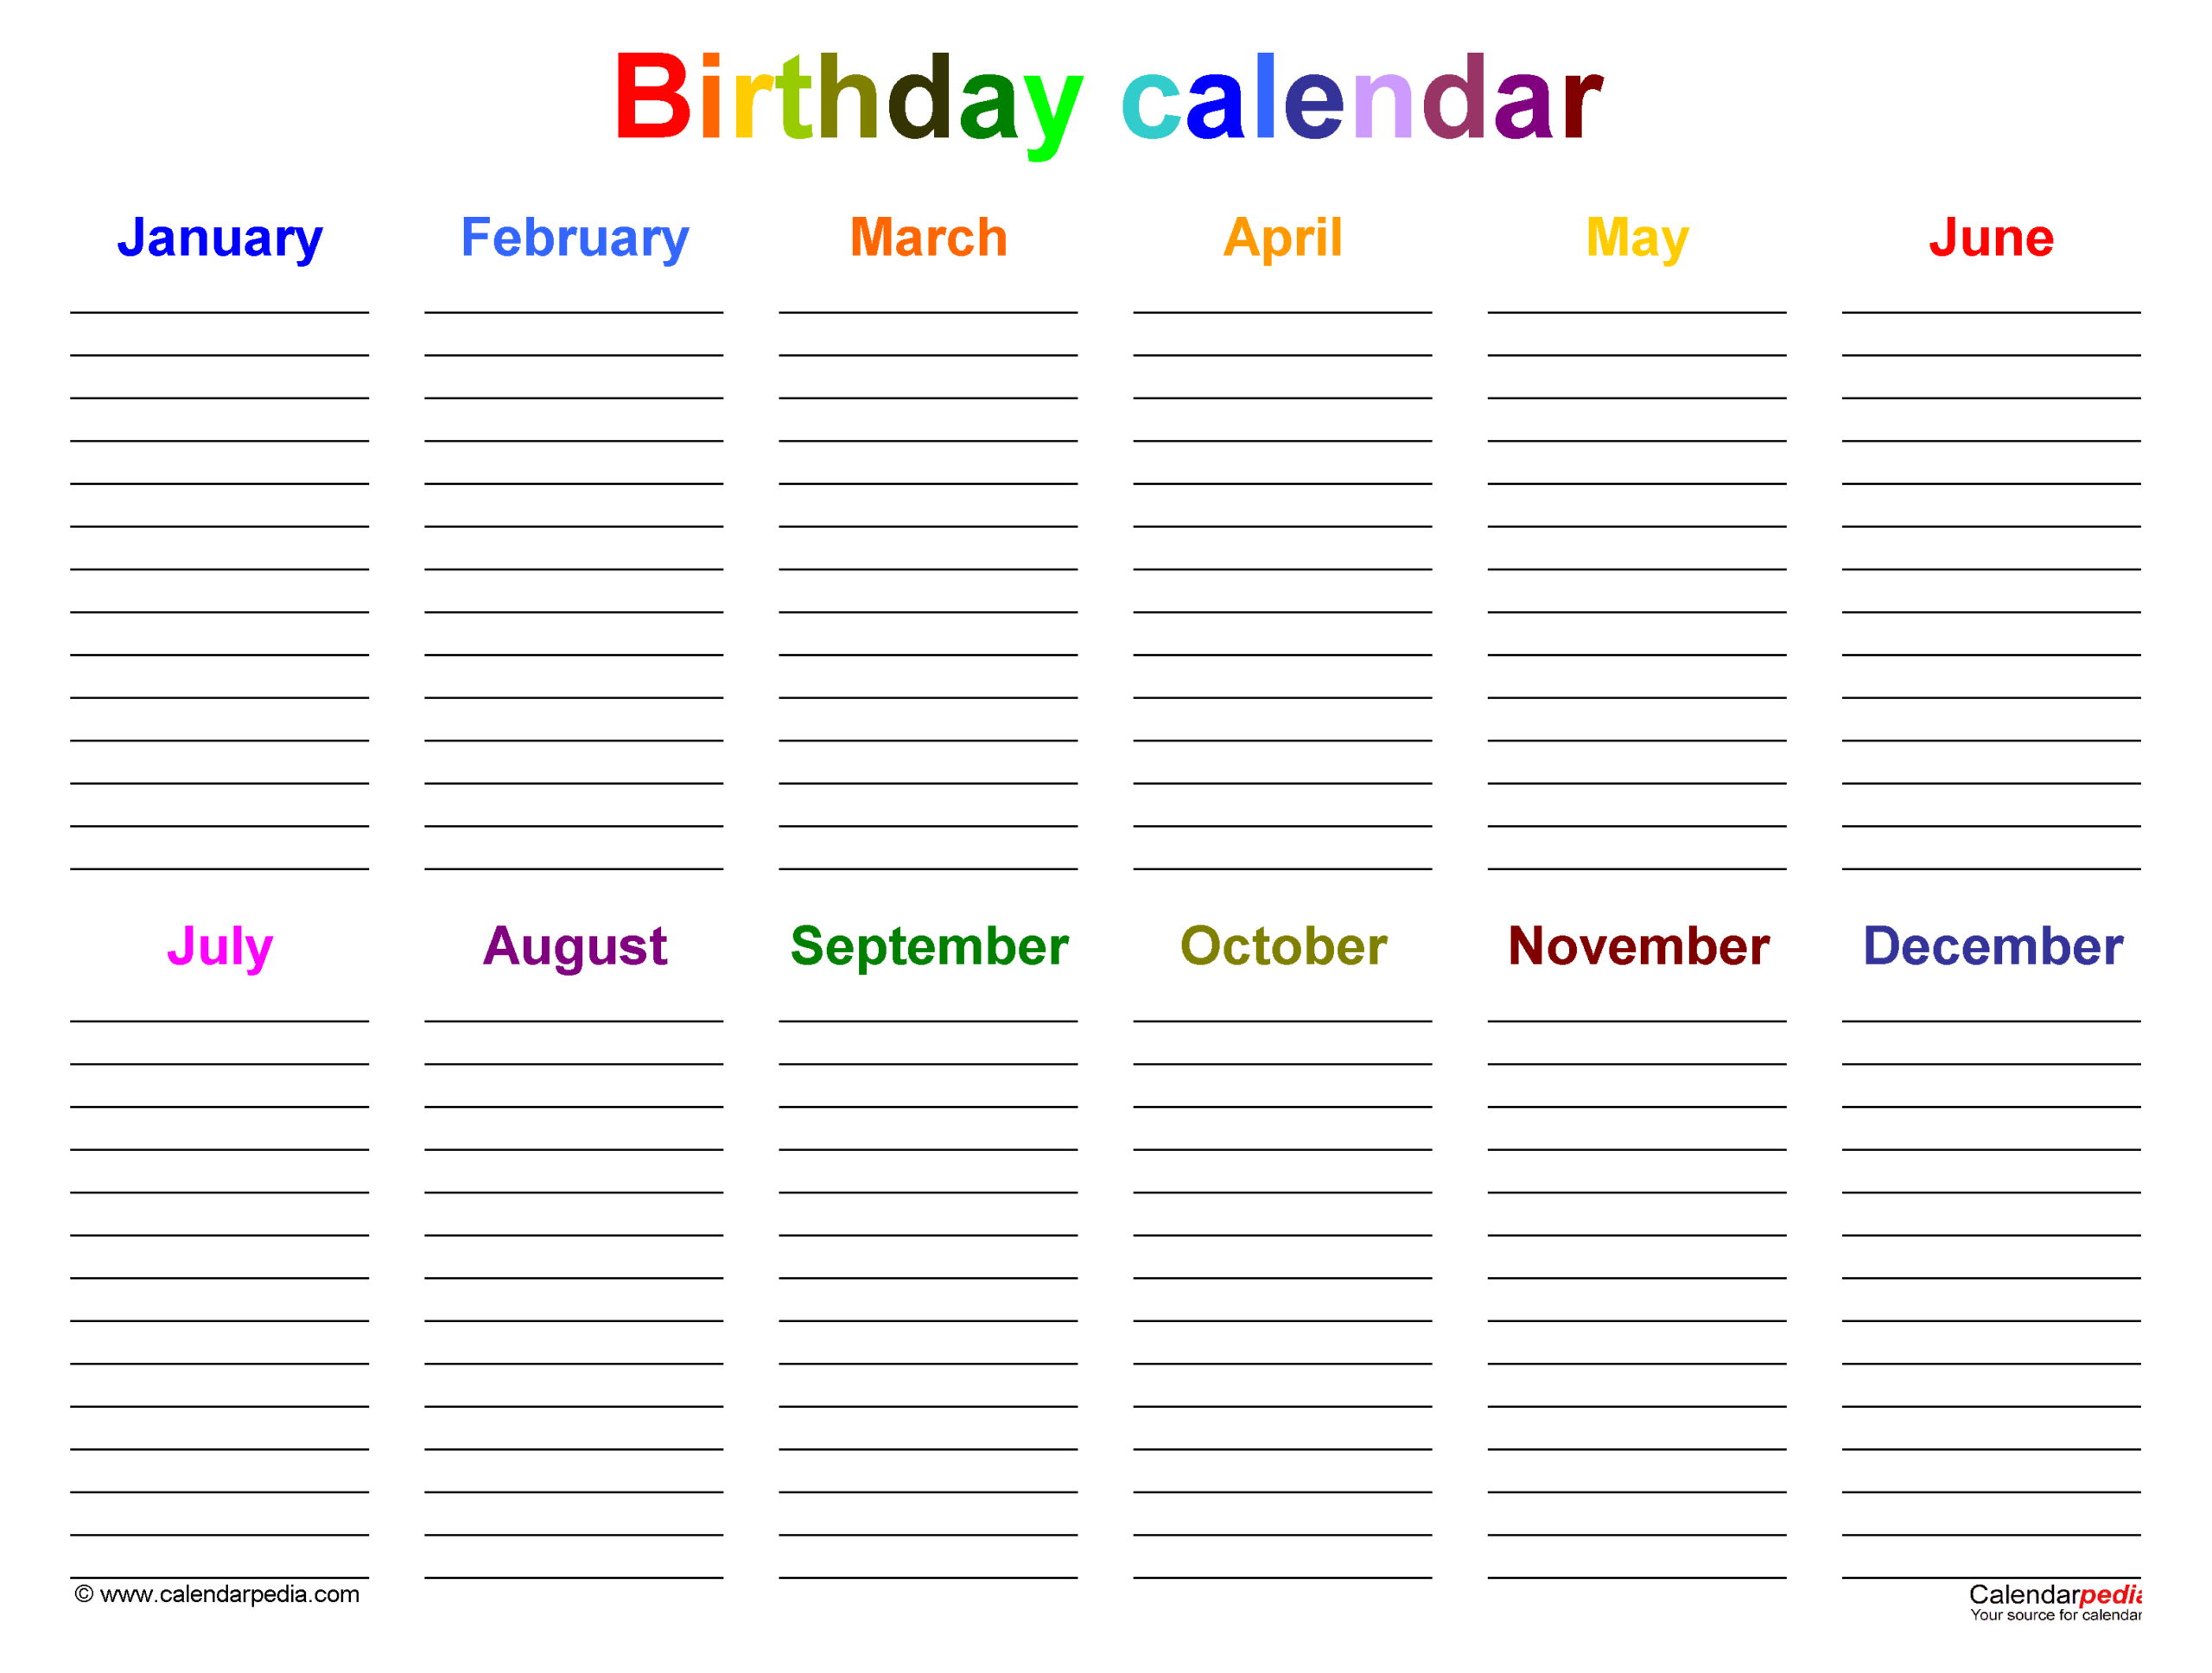 Birthday Calendars  Free Printable Microsoft Word Templates with regard to Microsoft Birthday Calendar Template